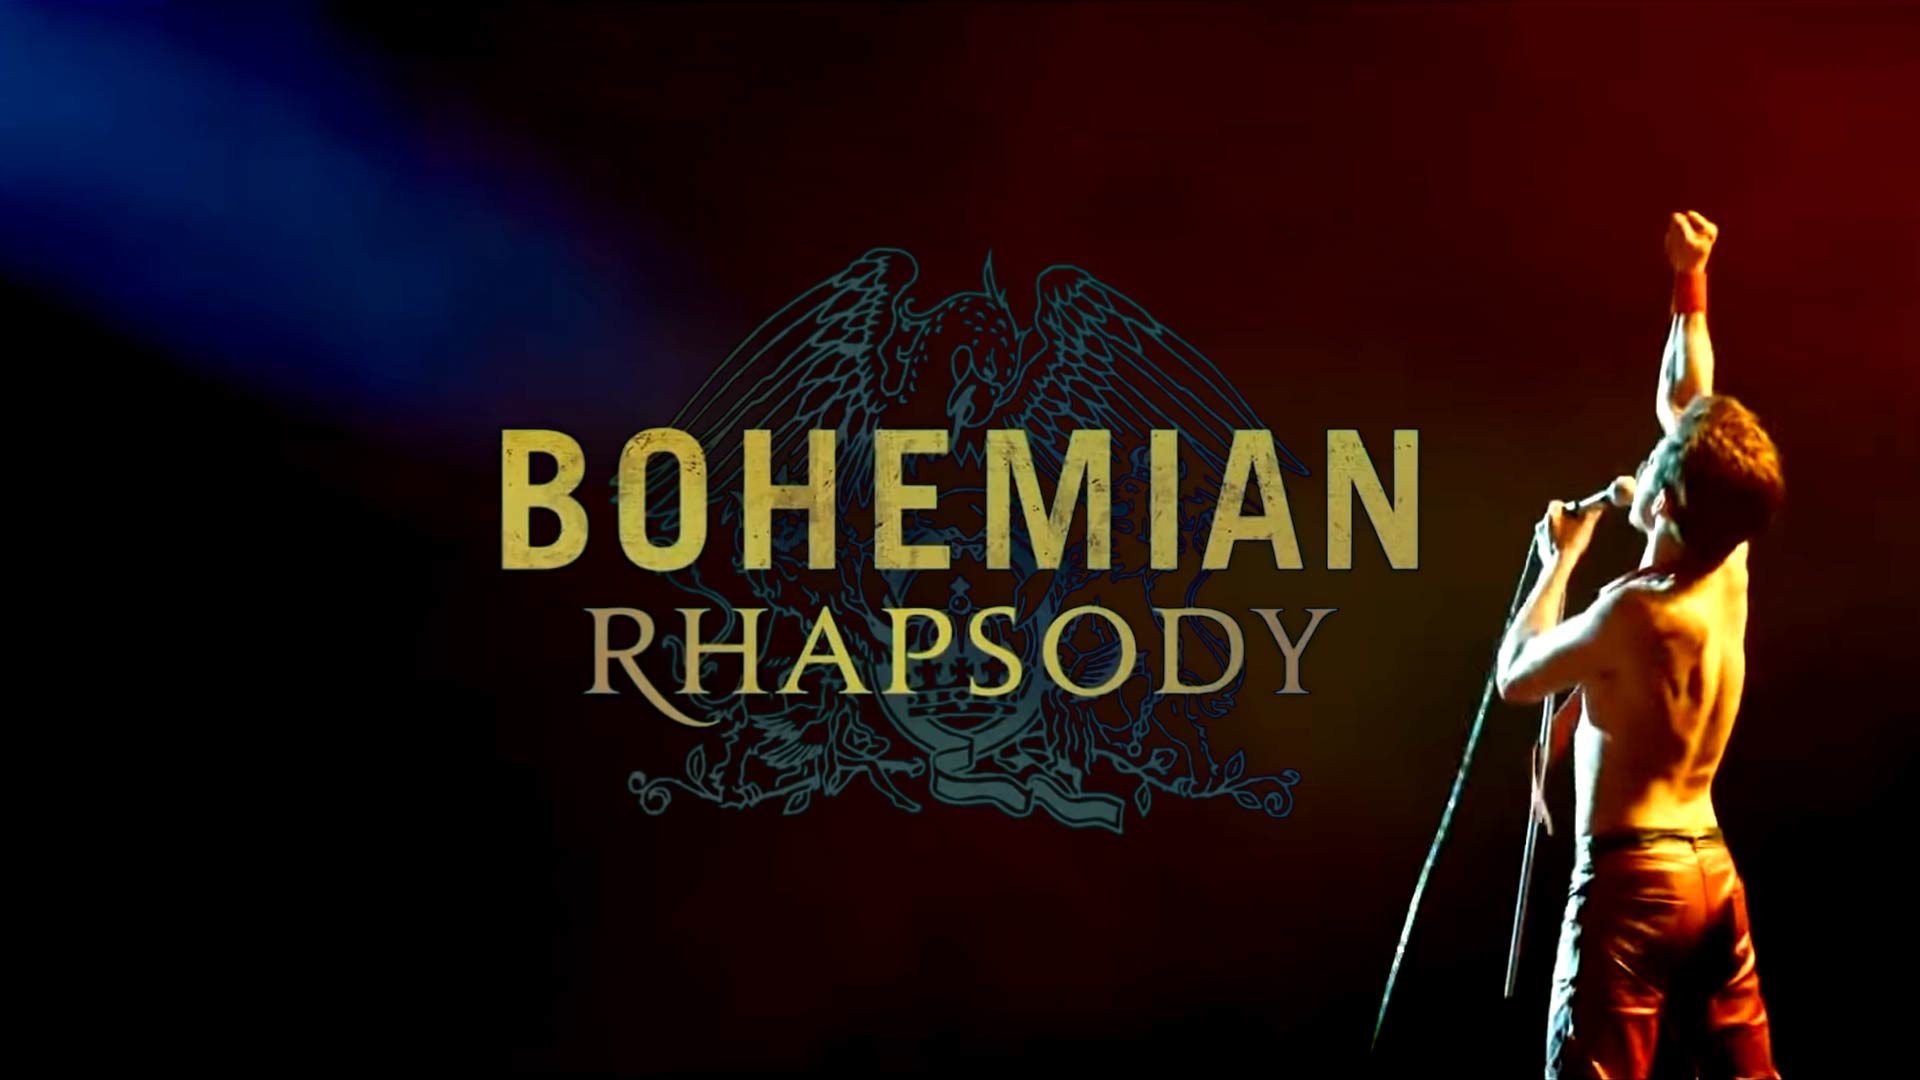 Colpo di scena ai Golden Globes: vince Bohemian Rhapsody, niente premi a Lady Gaga